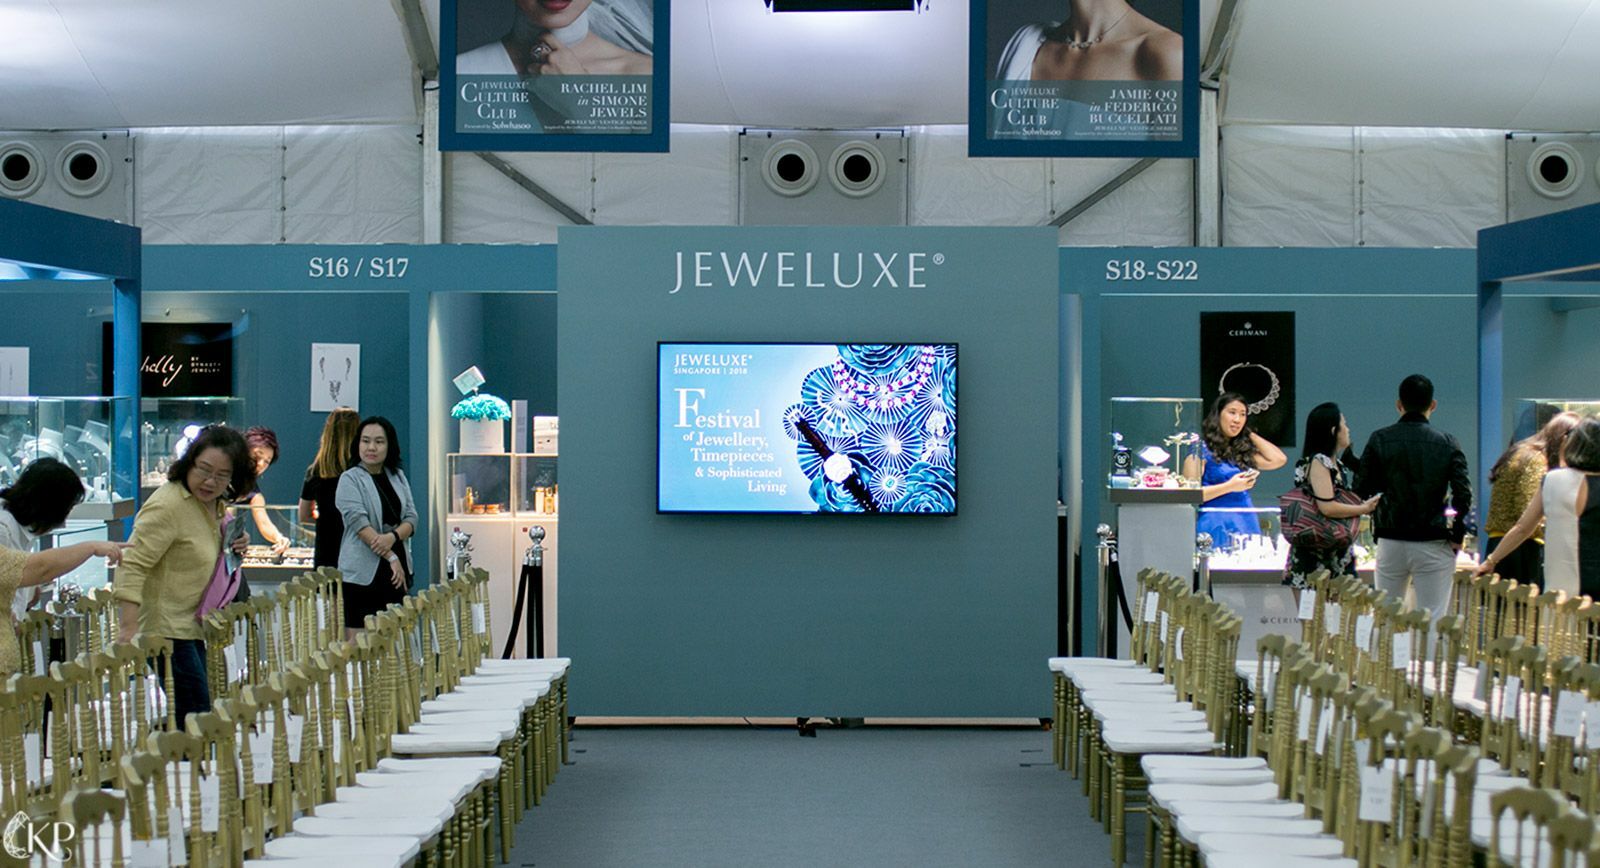 Jeweluxe 2018 exhibition in Singapore